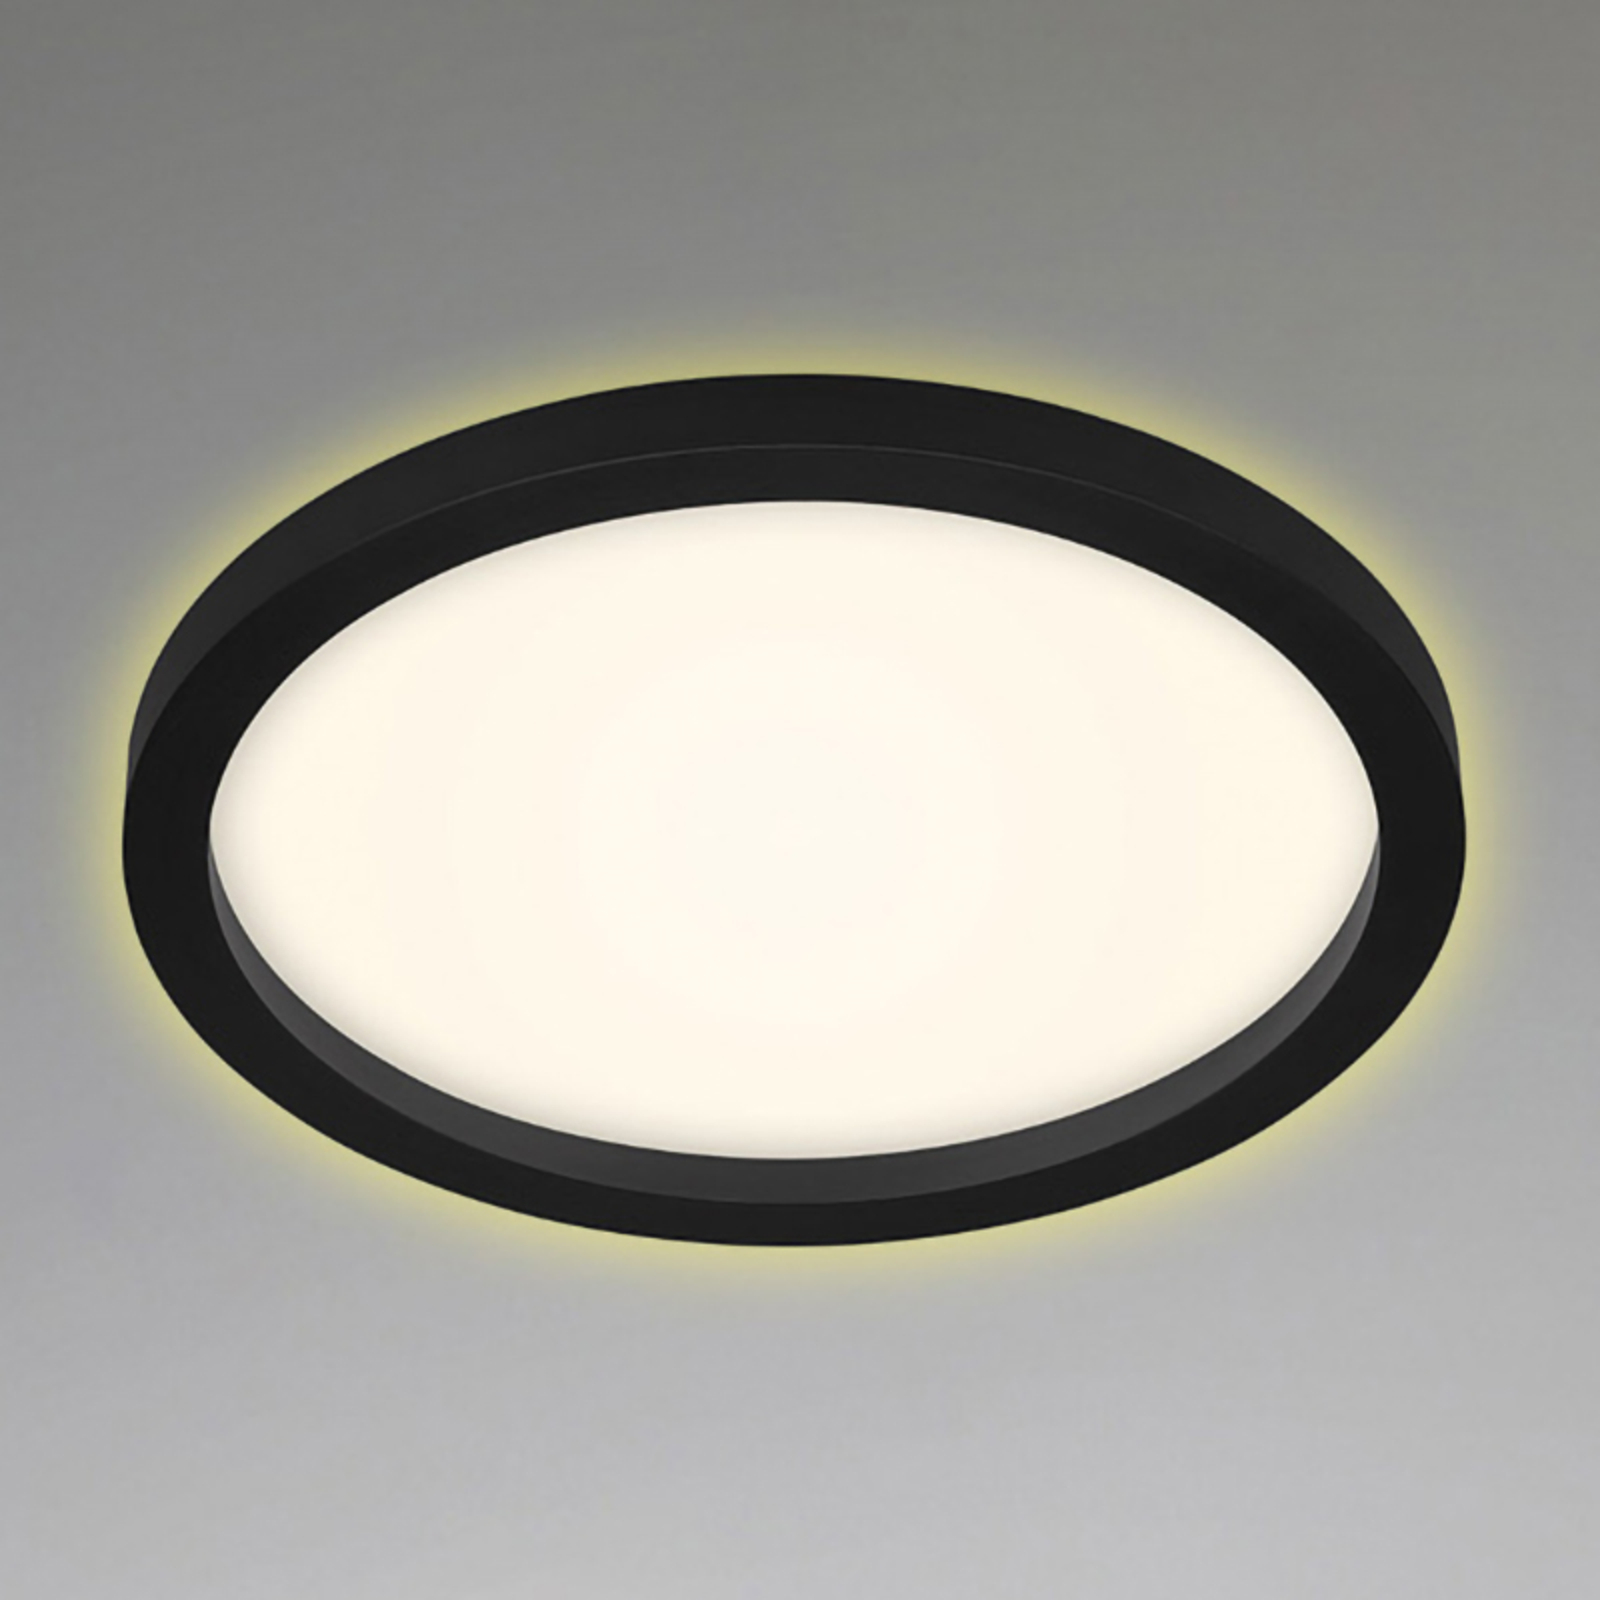 LED plafondlamp 7361, Ø 29 cm, zwart